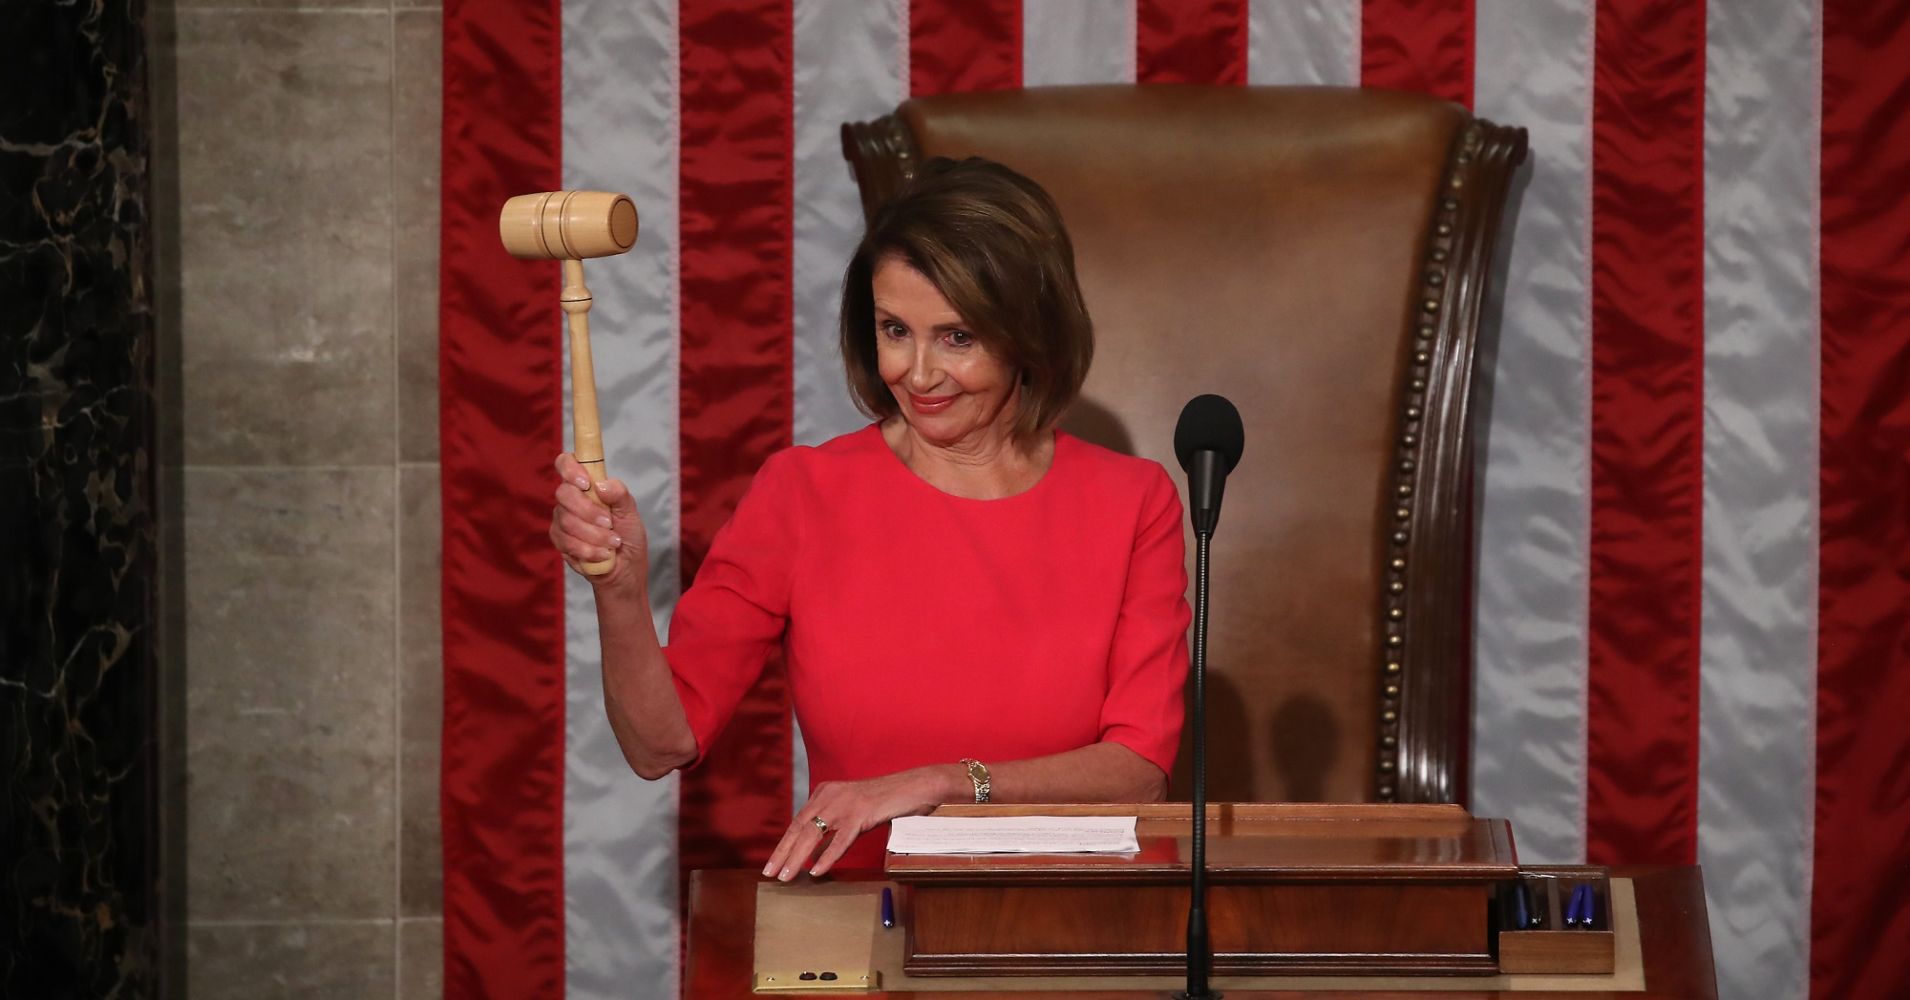 Nancy Pelosi elected as Speaker of diverse U.S. House of Representatives